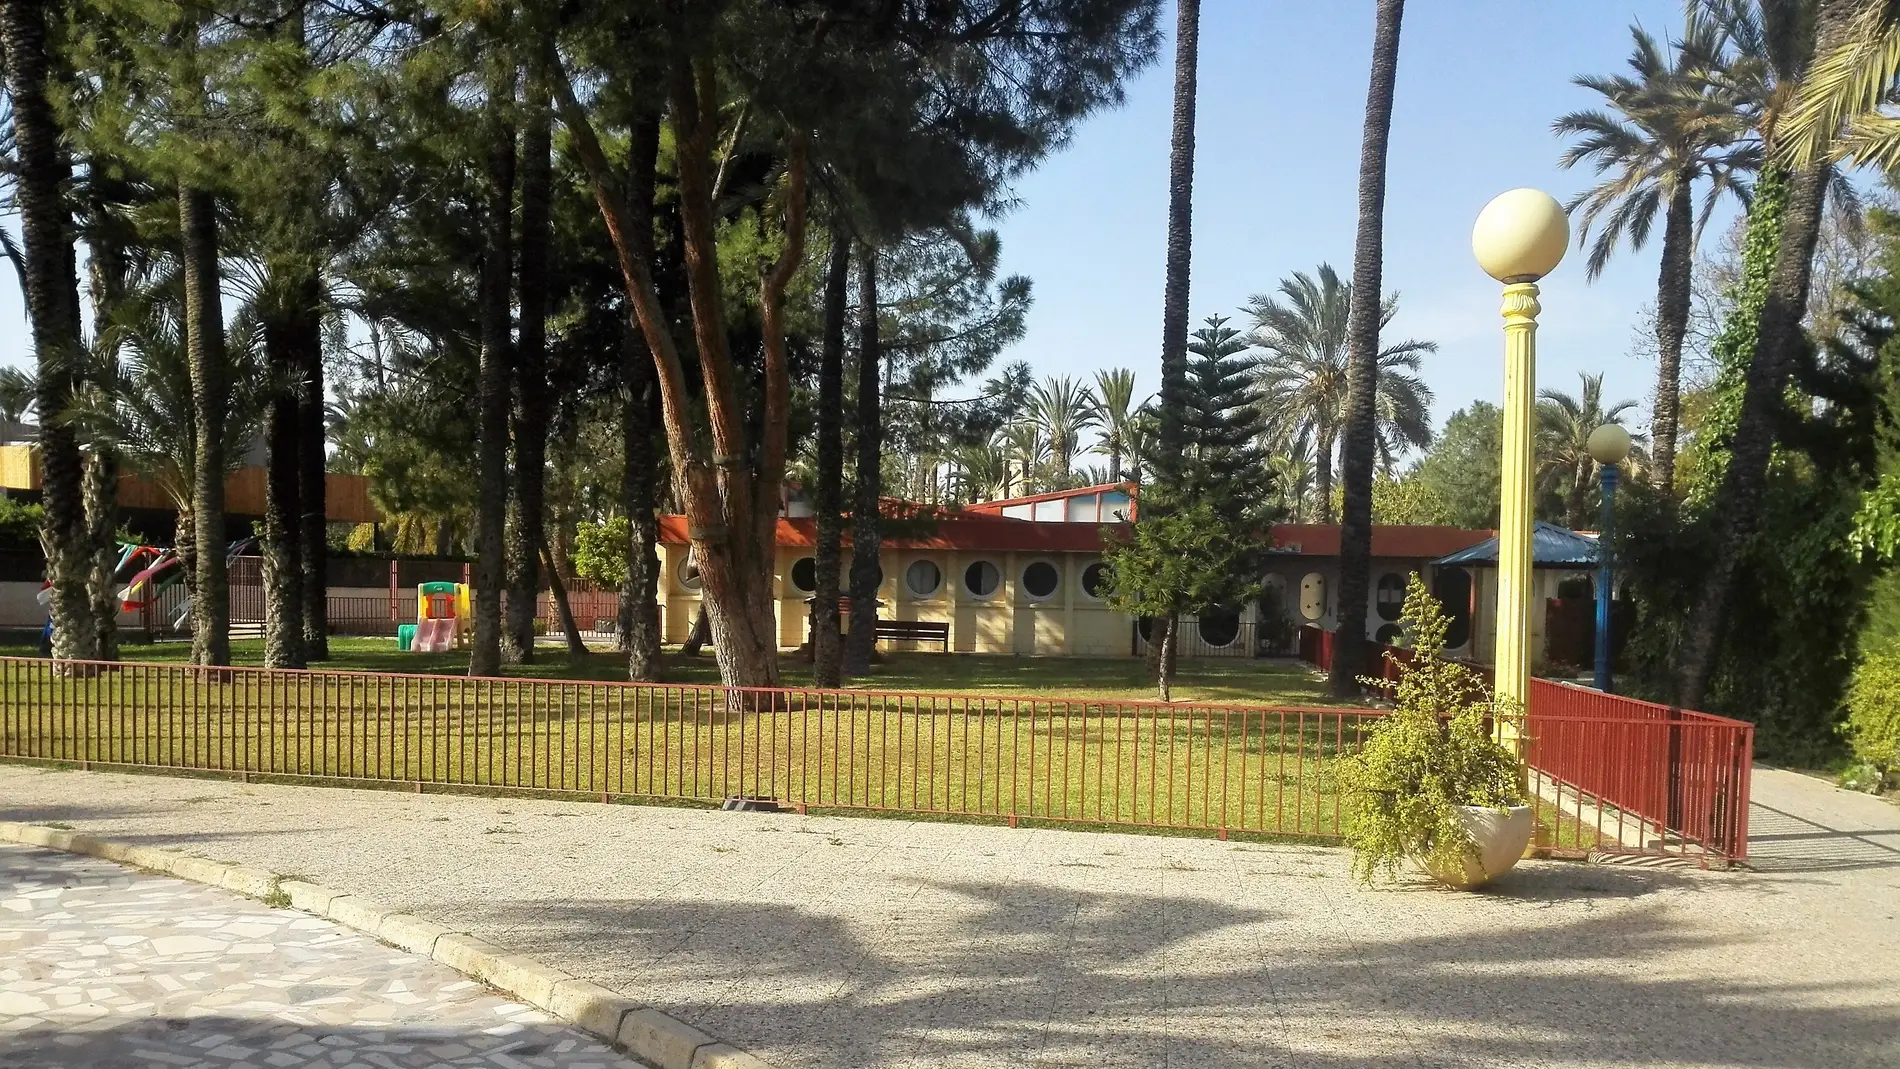 Escuela infantil municipal 'Els Xiquets' de Elche